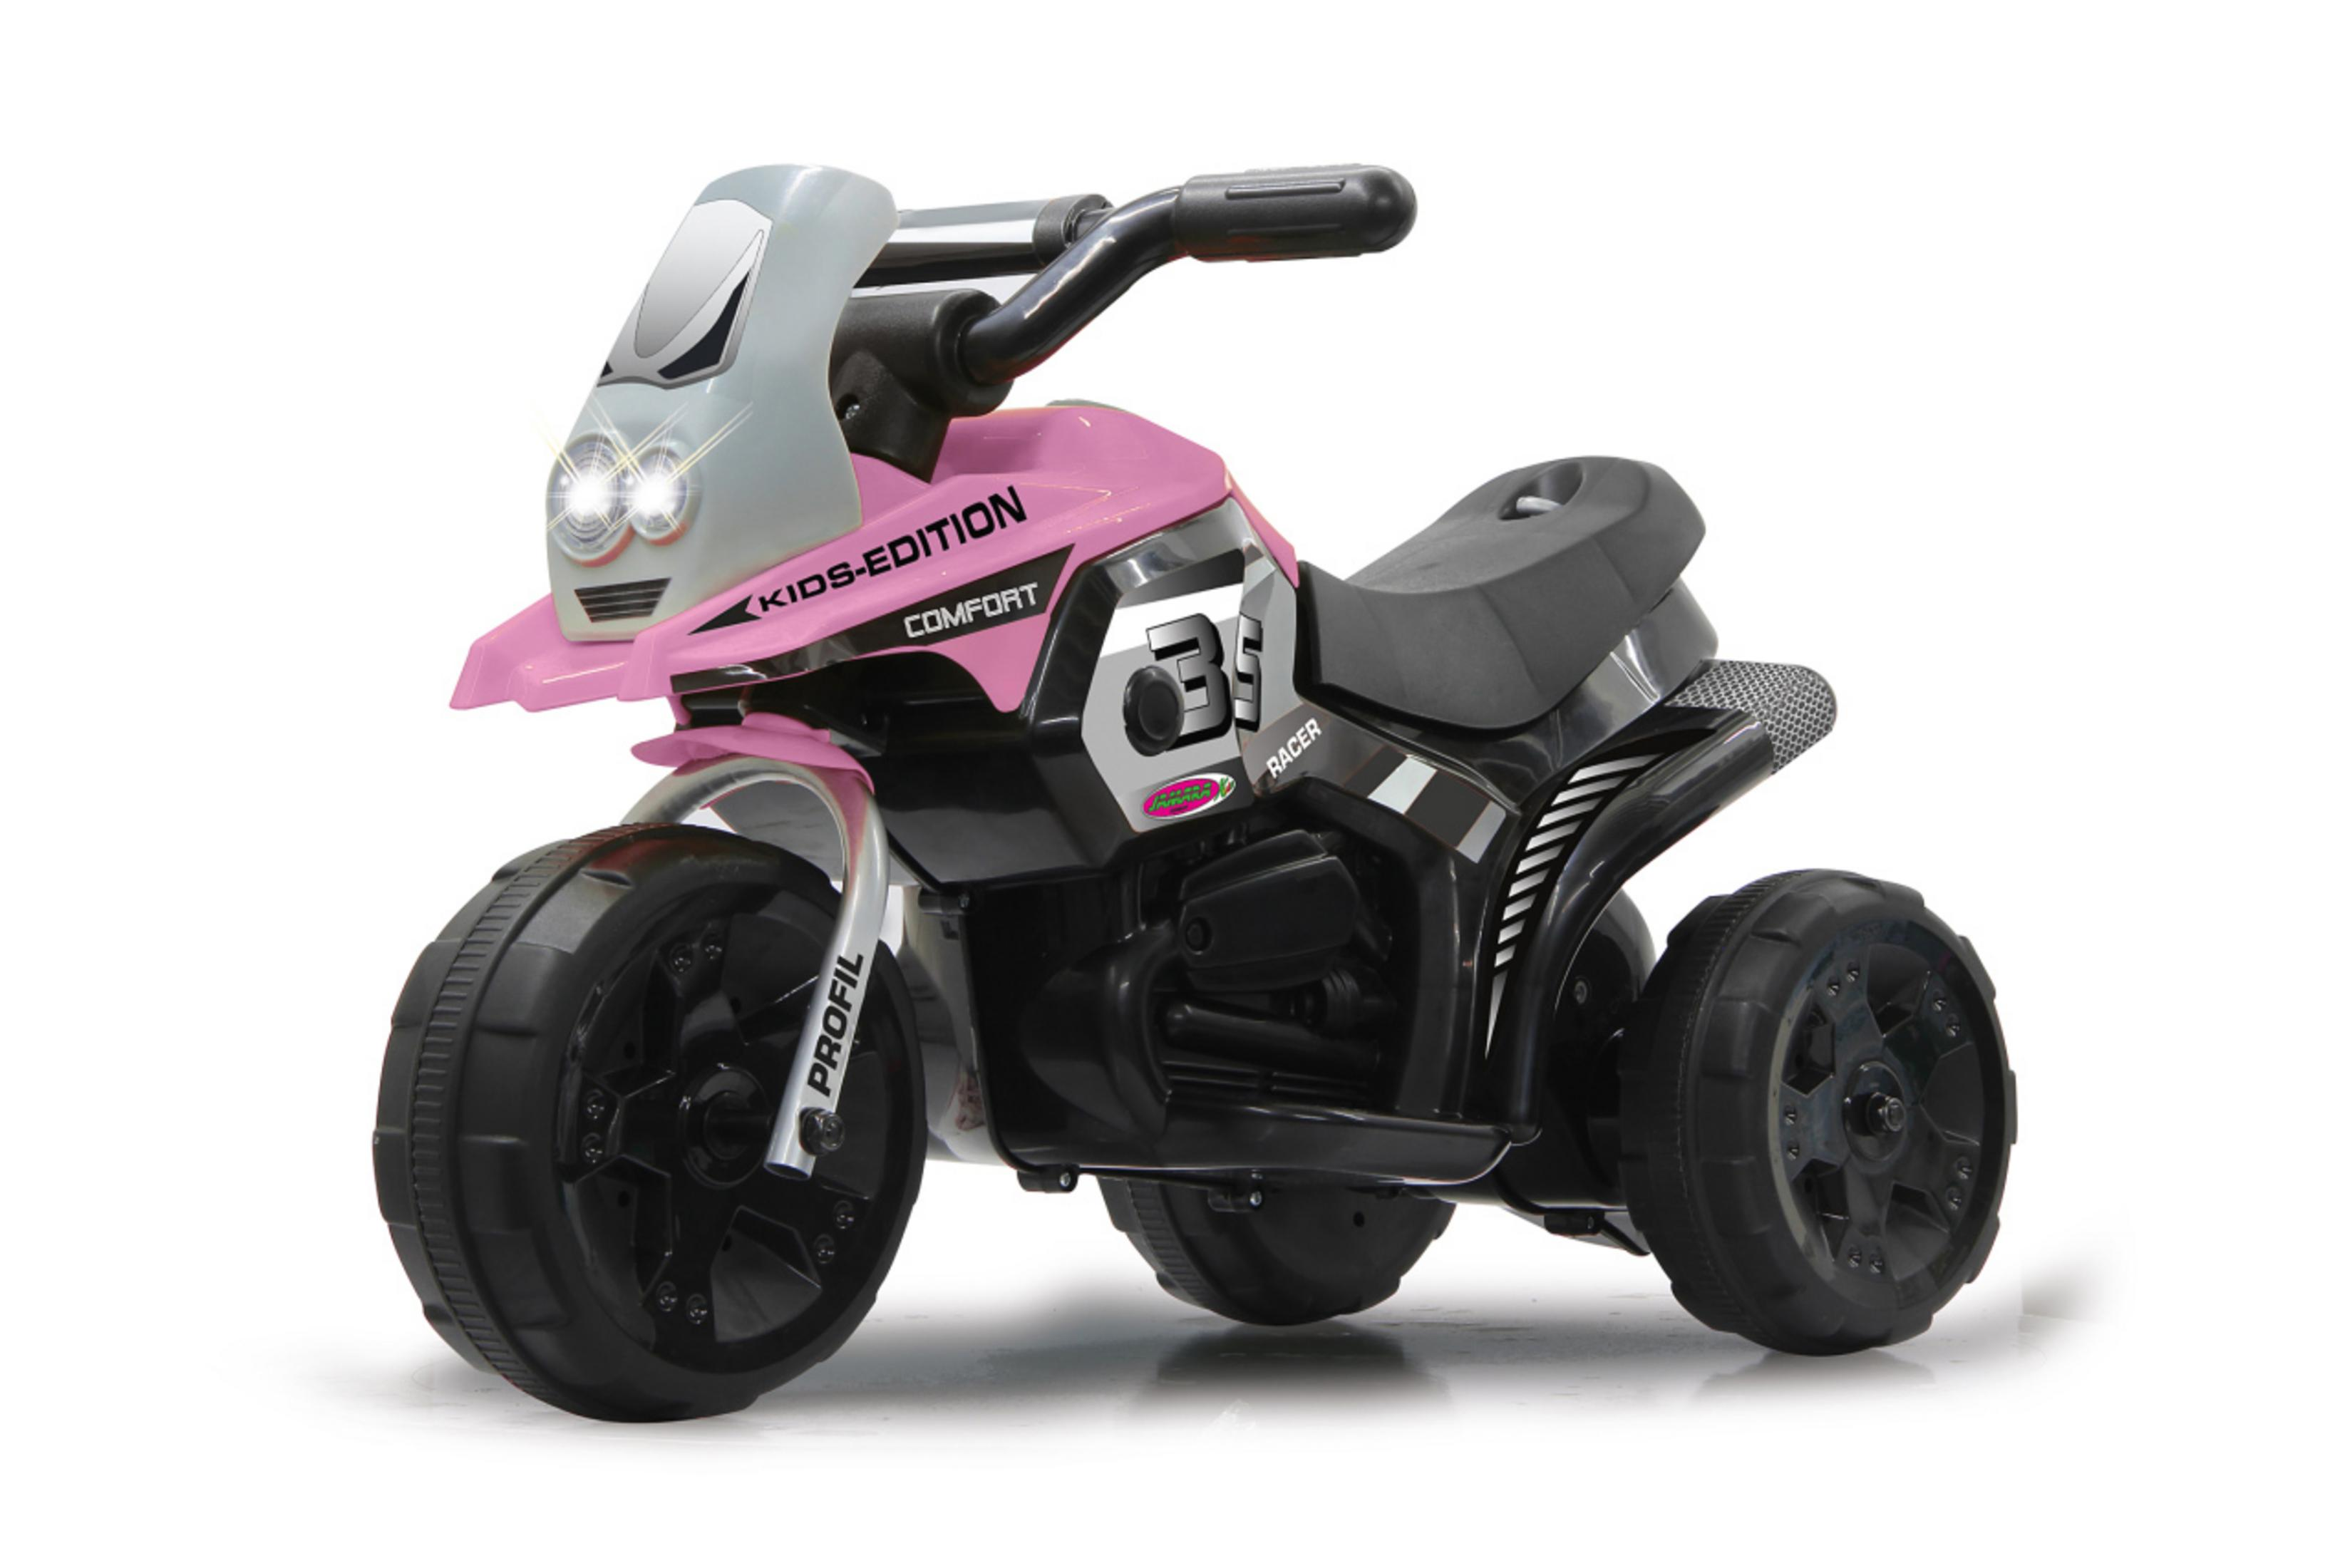 RIDE-ON 460228 E-Trike, PINK RACER E-TRIKE Pink JAMARA